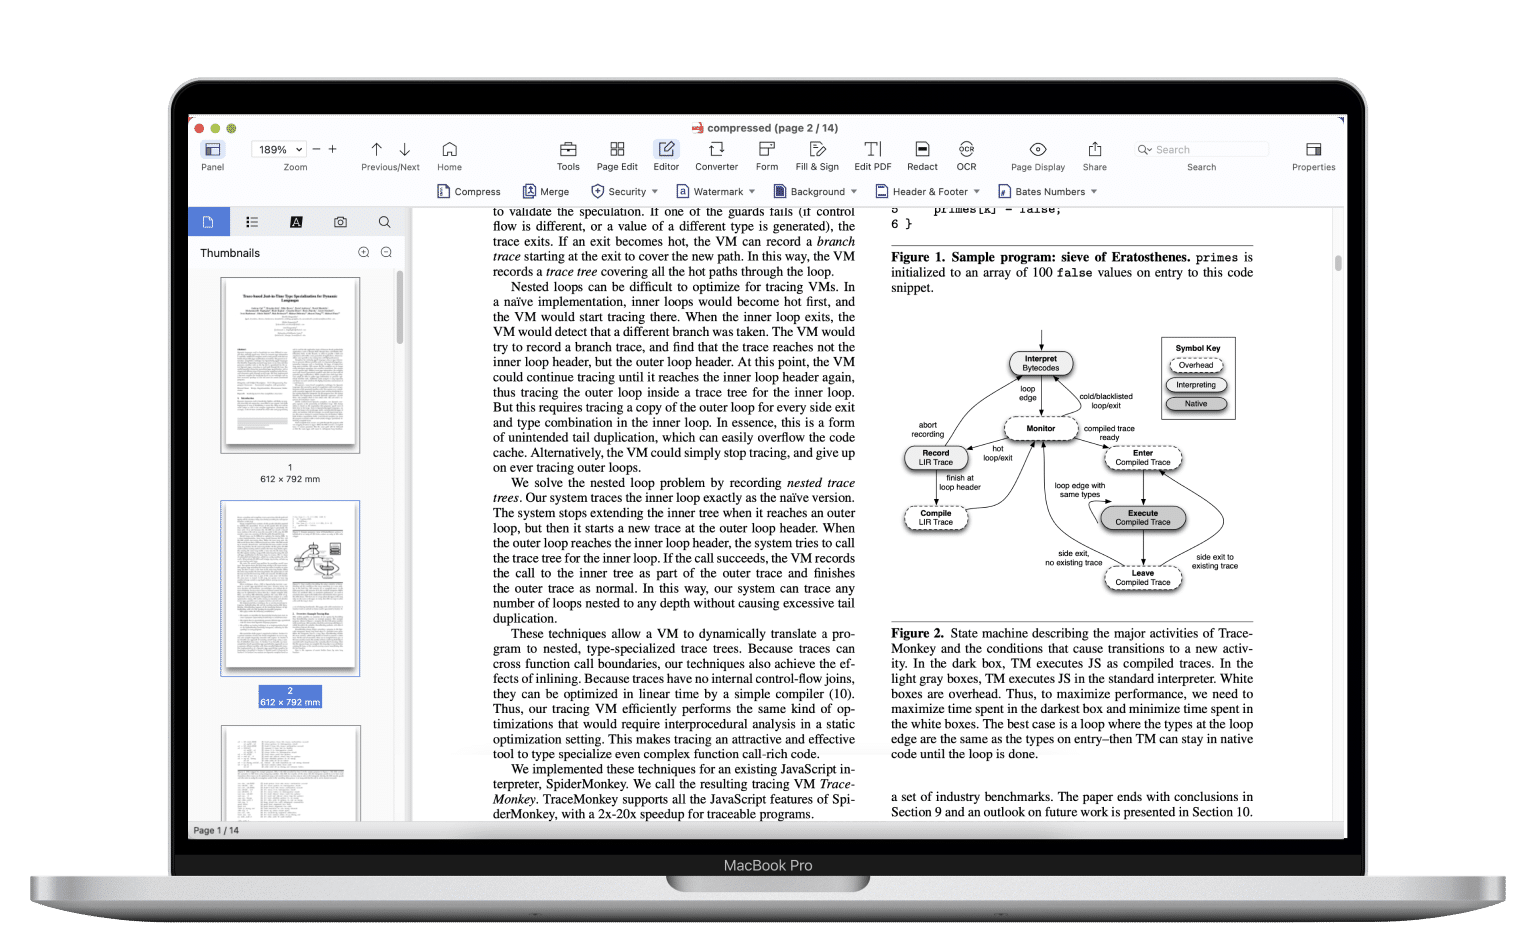 pdf reader mac download